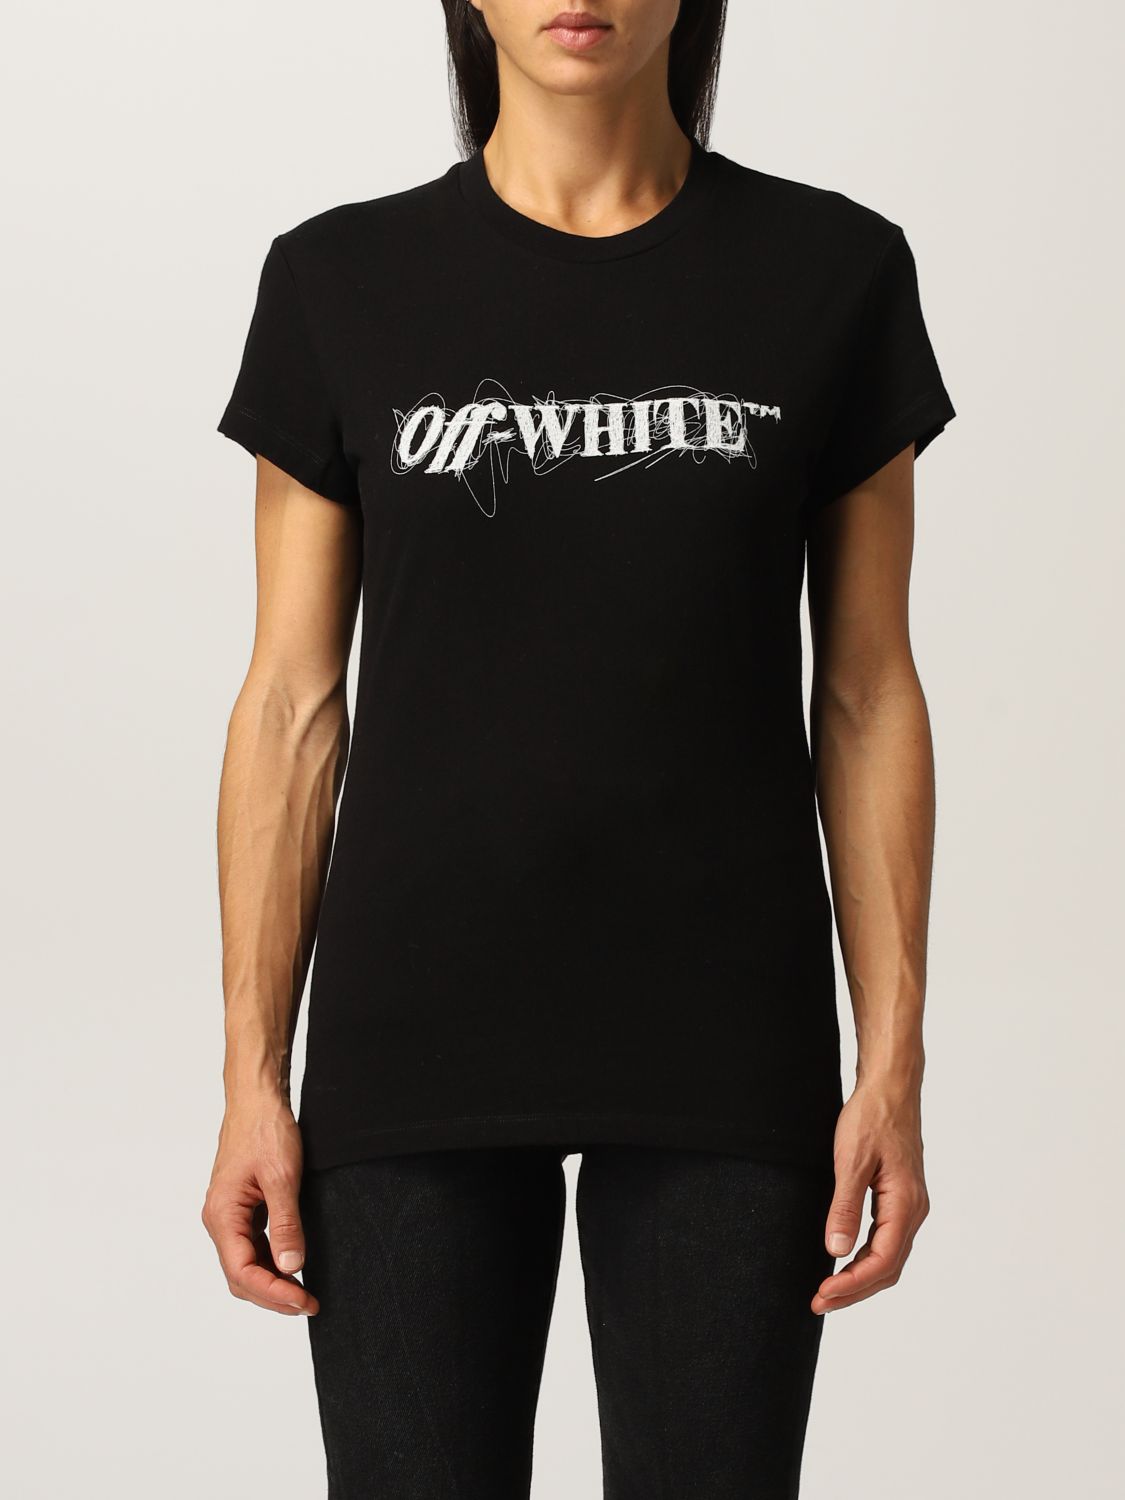 off white t shirt womens